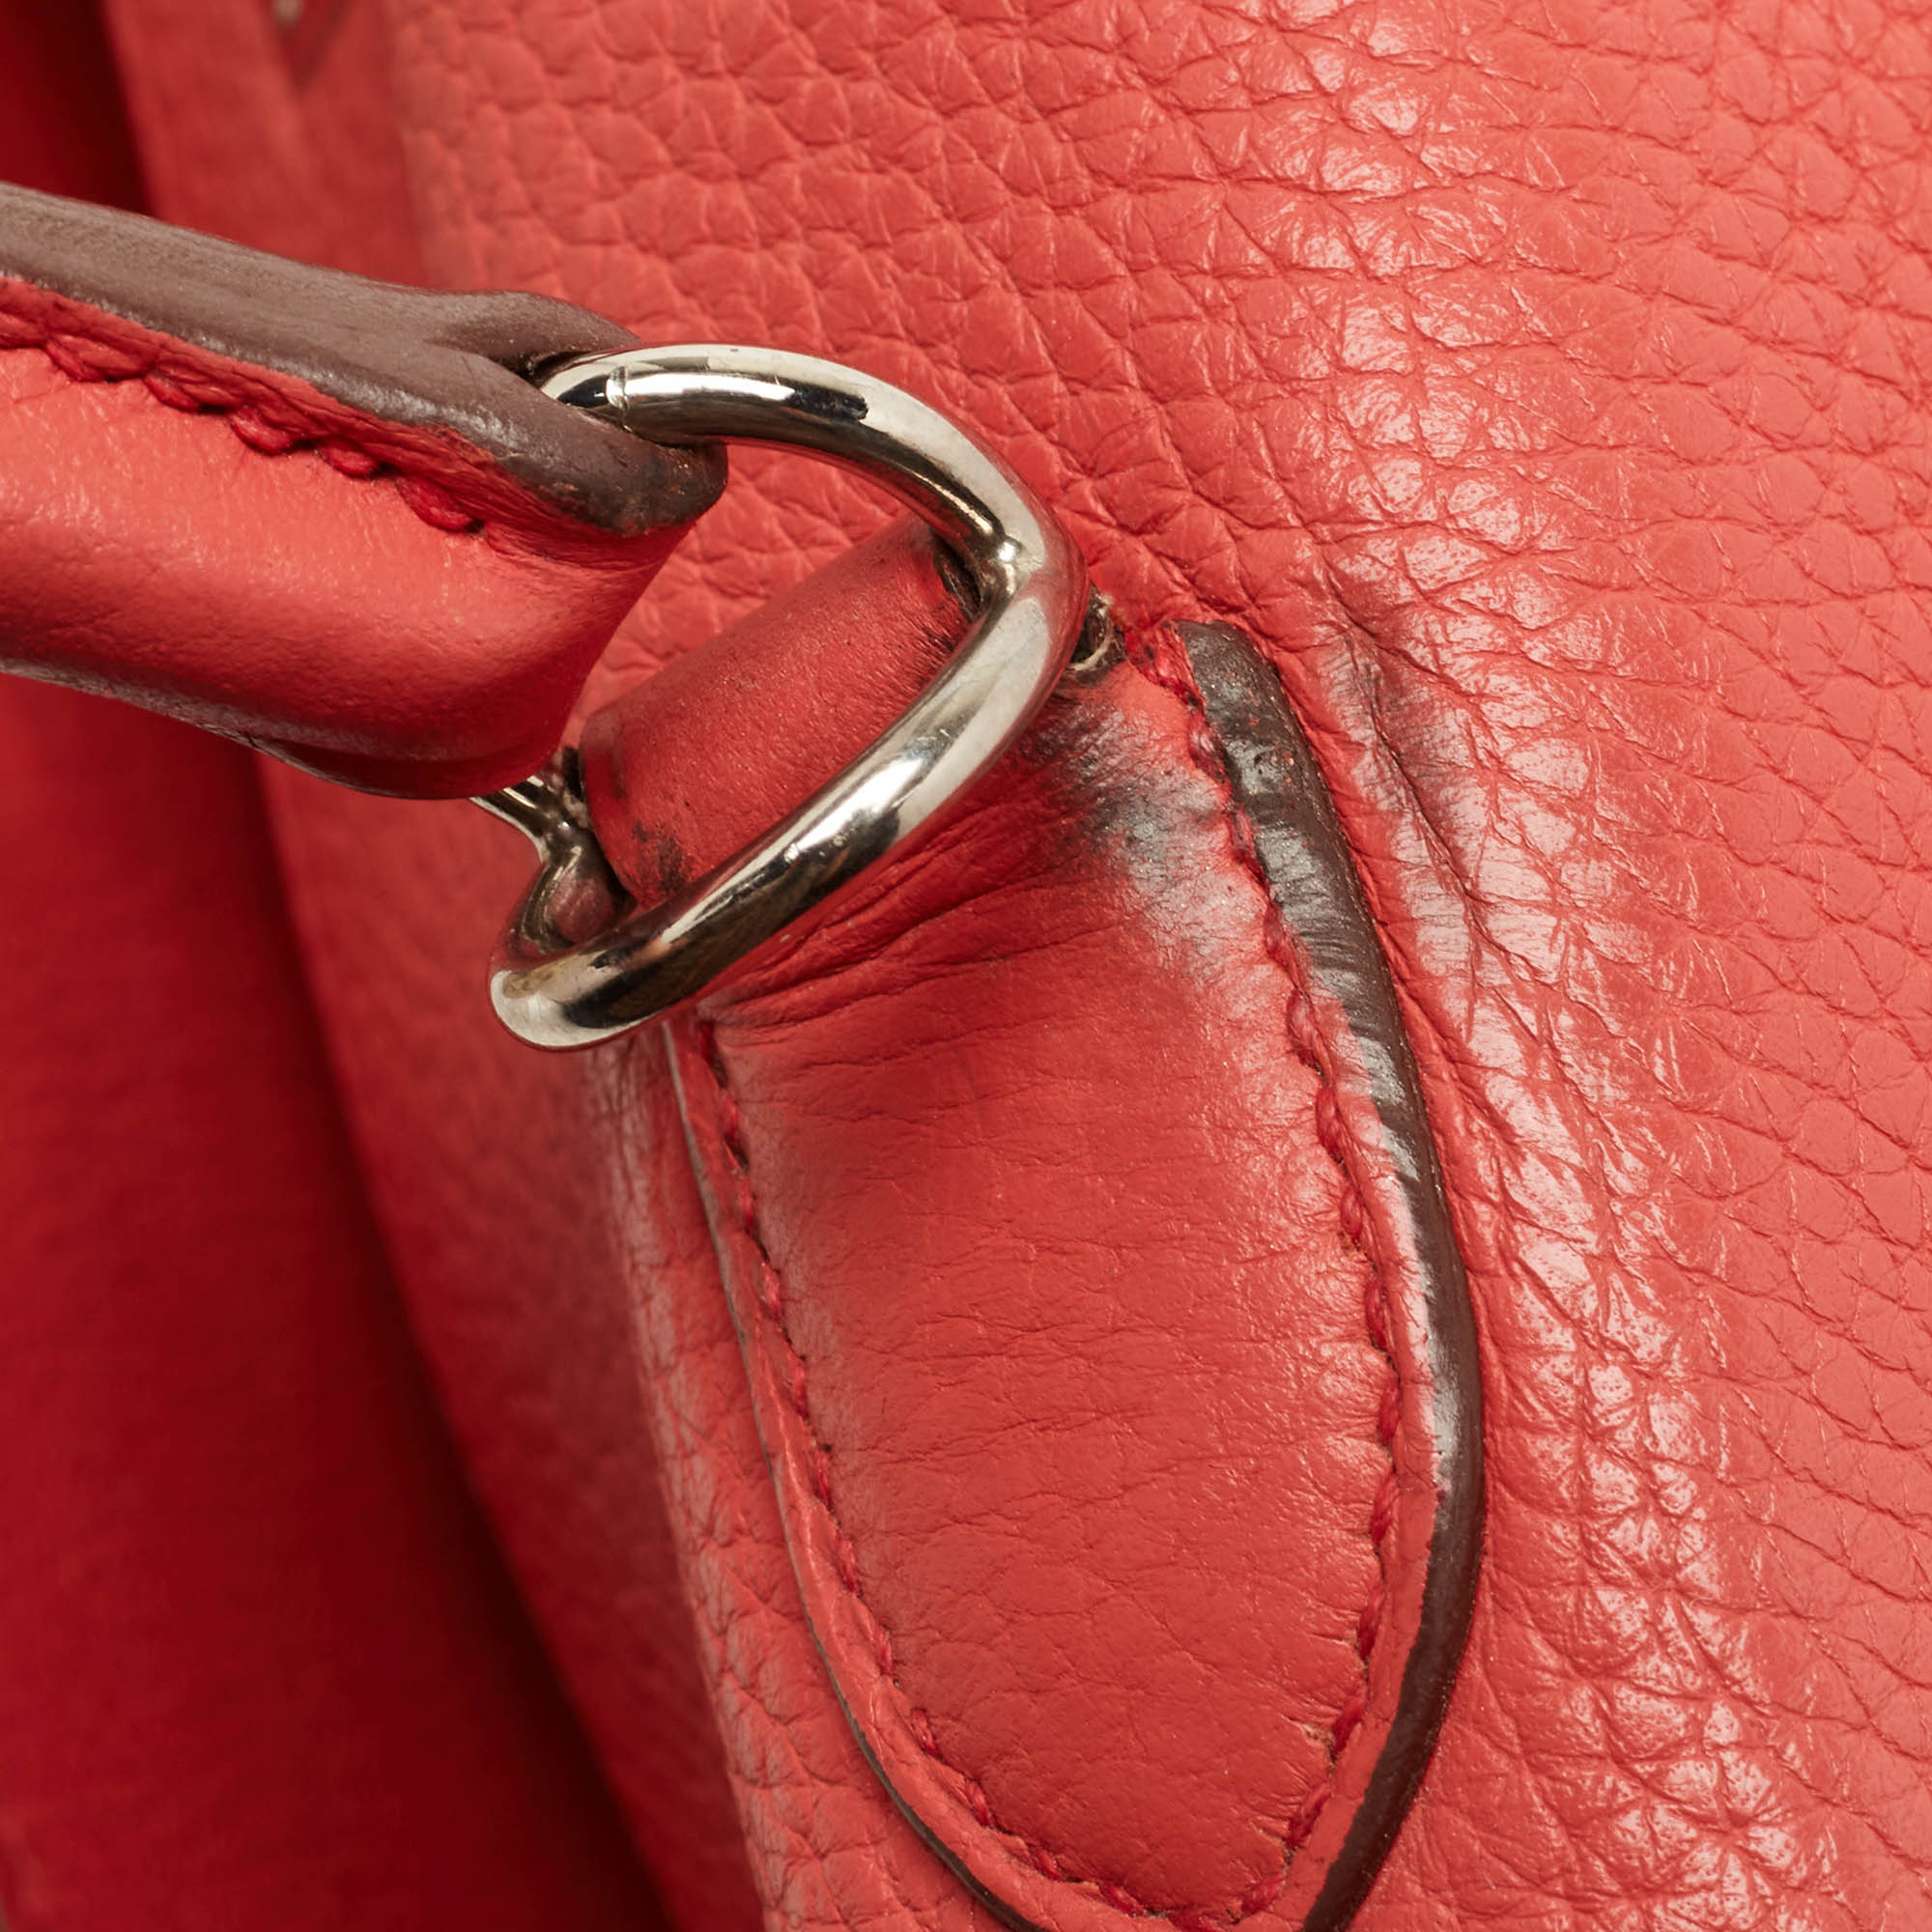 Hermès Rose Jaipur Taurillion Clemence Leather Palladium Finish Kelly Retourne 35 Bag